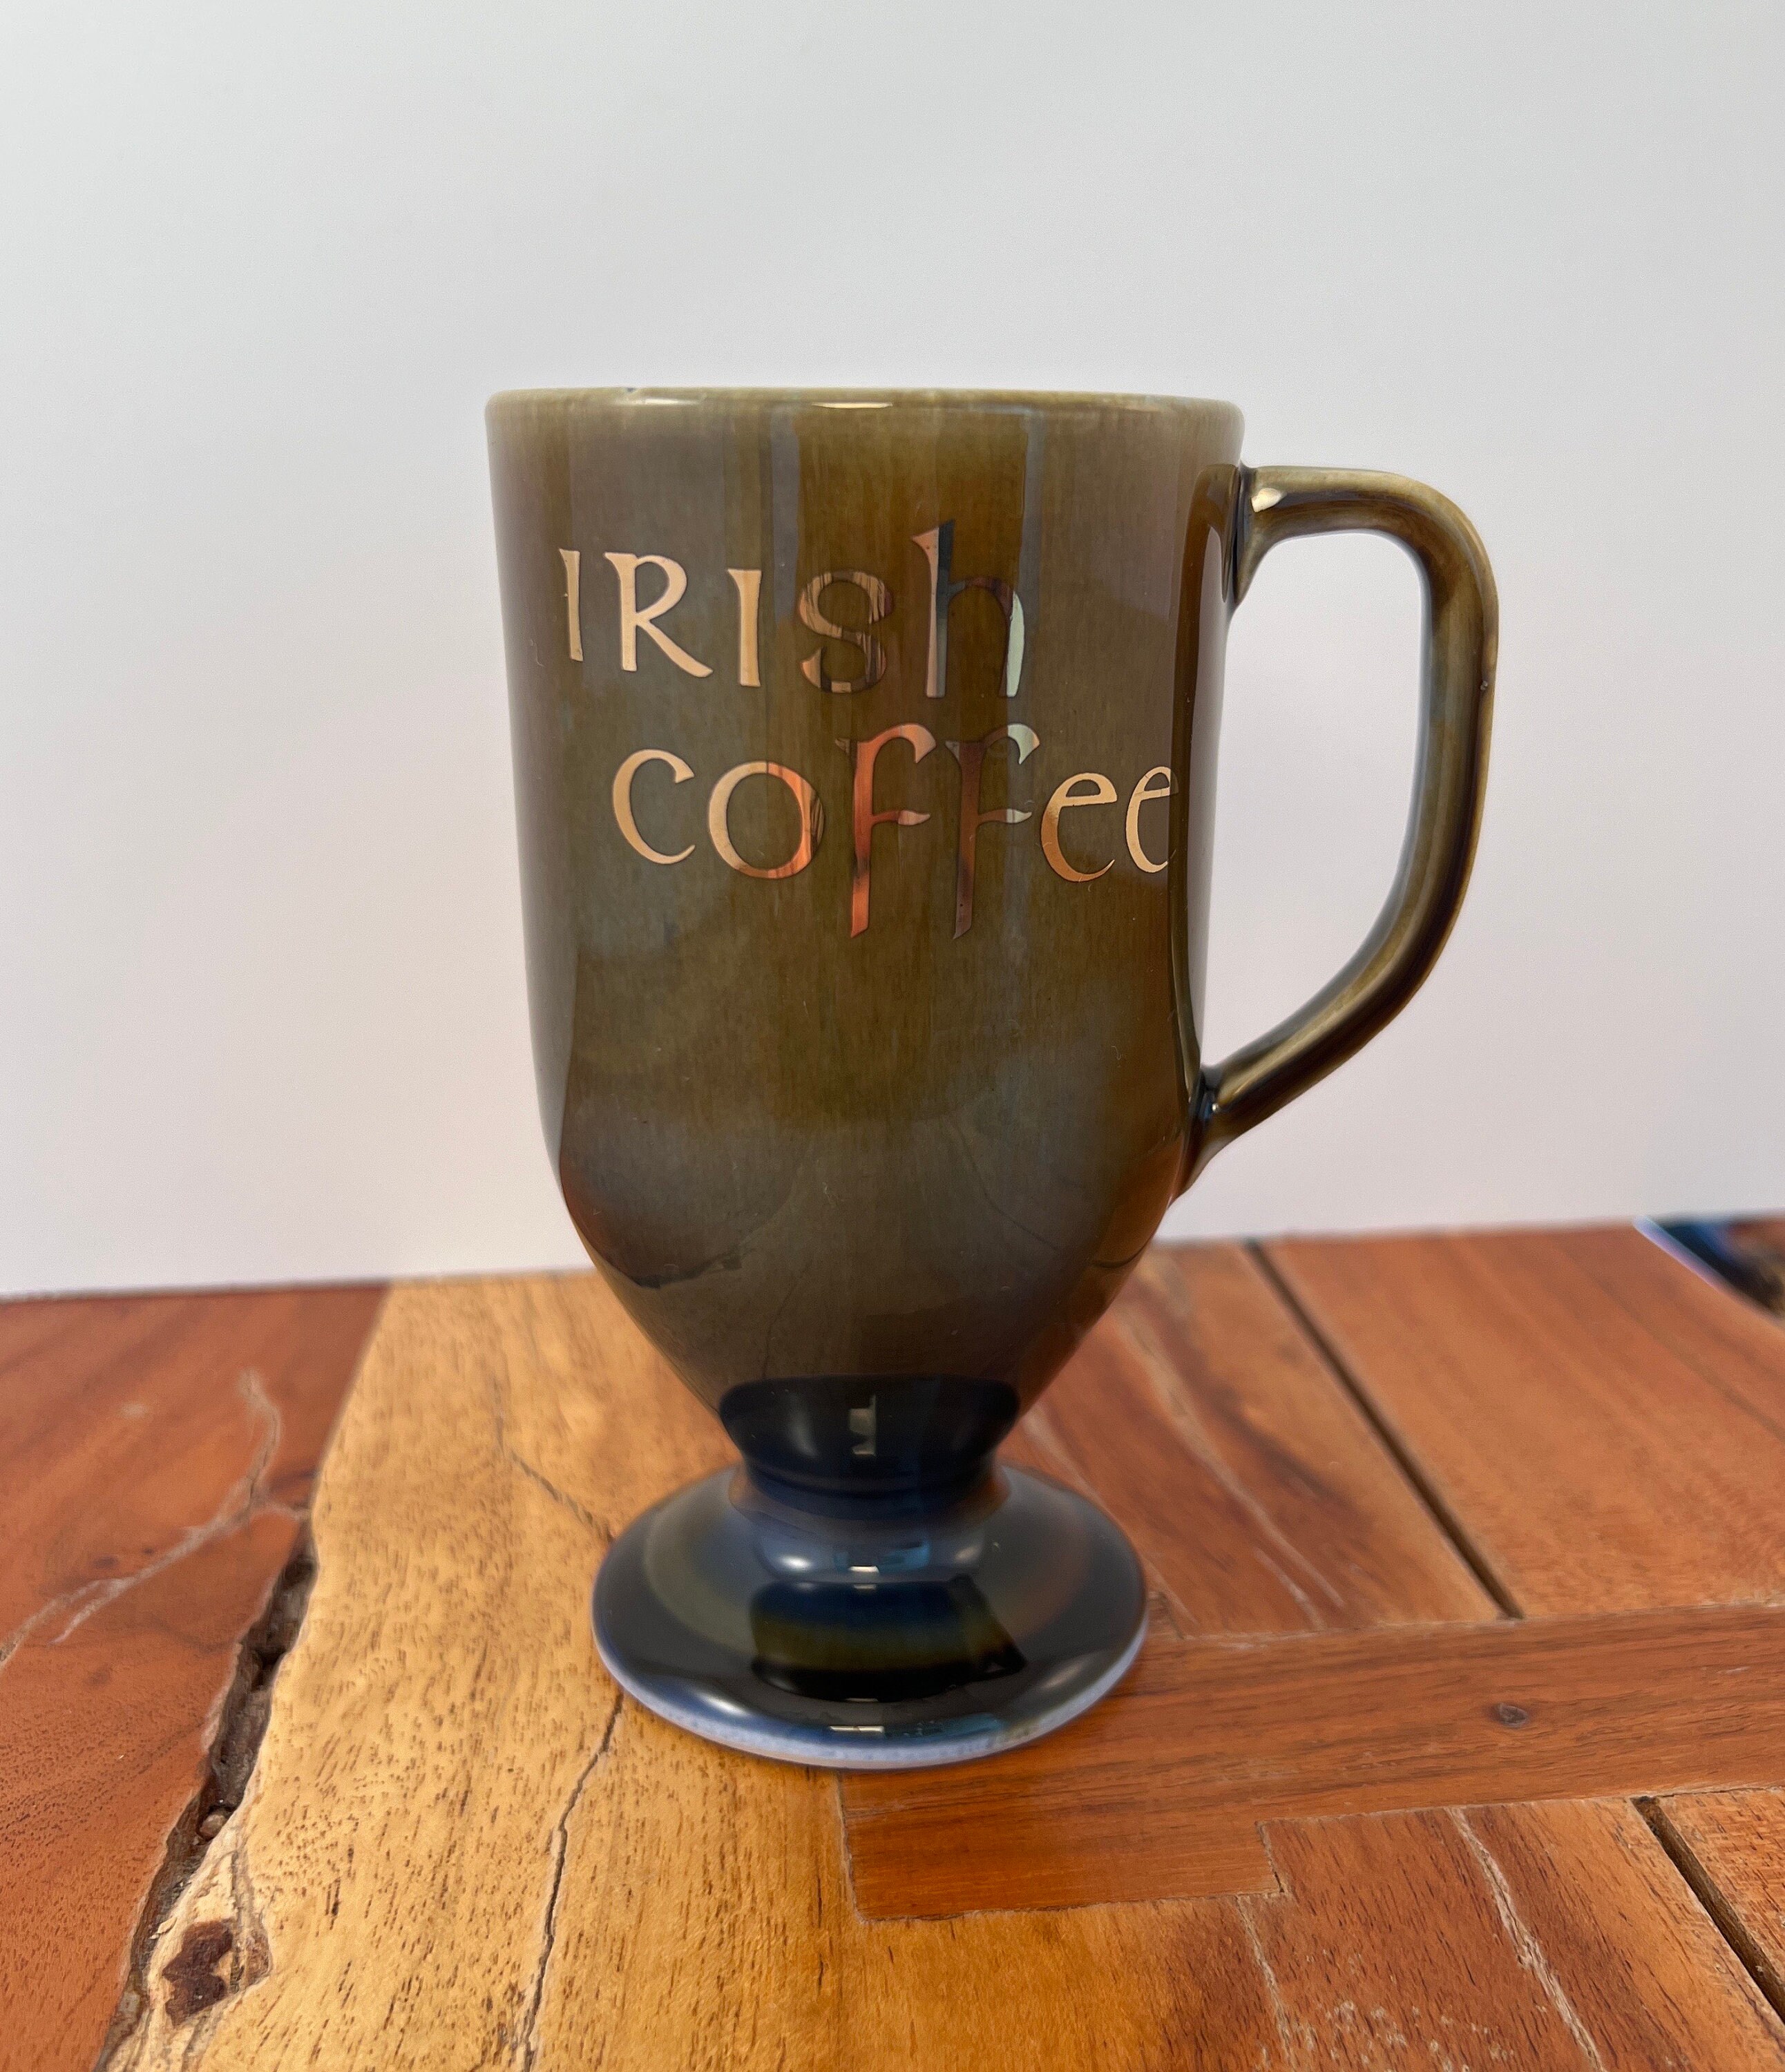 Vintage Blue Green Wade Irish Coffee Mugs Made in Ireland Sold